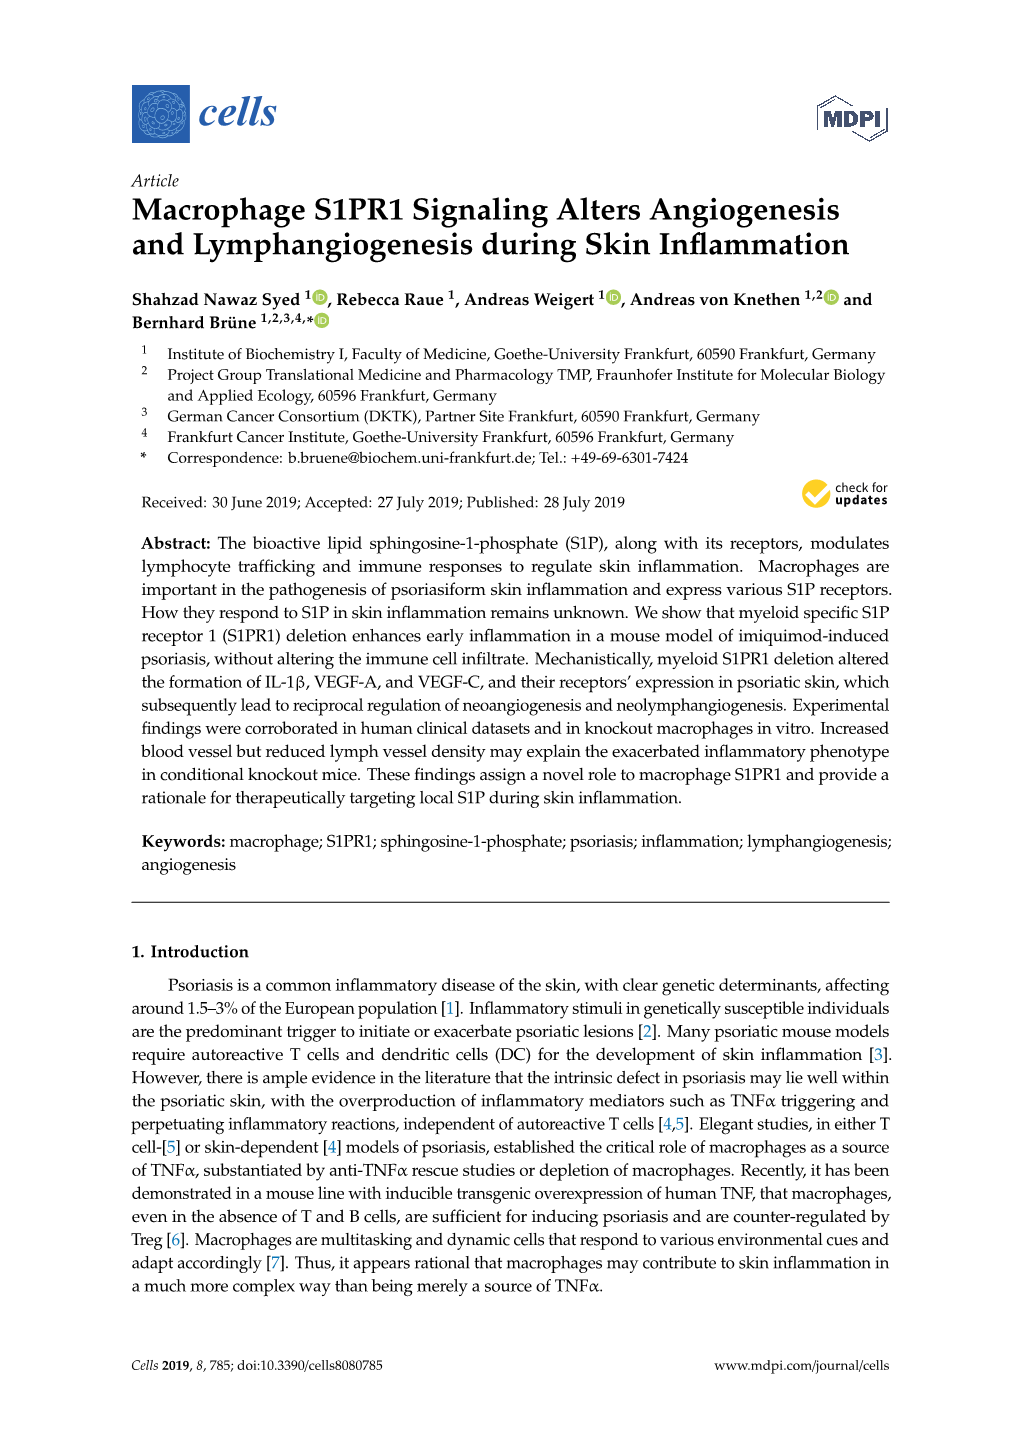 Macrophage S1PR1 Signaling Alters Angiogenesis and Lymphangiogenesis During Skin Inﬂammation